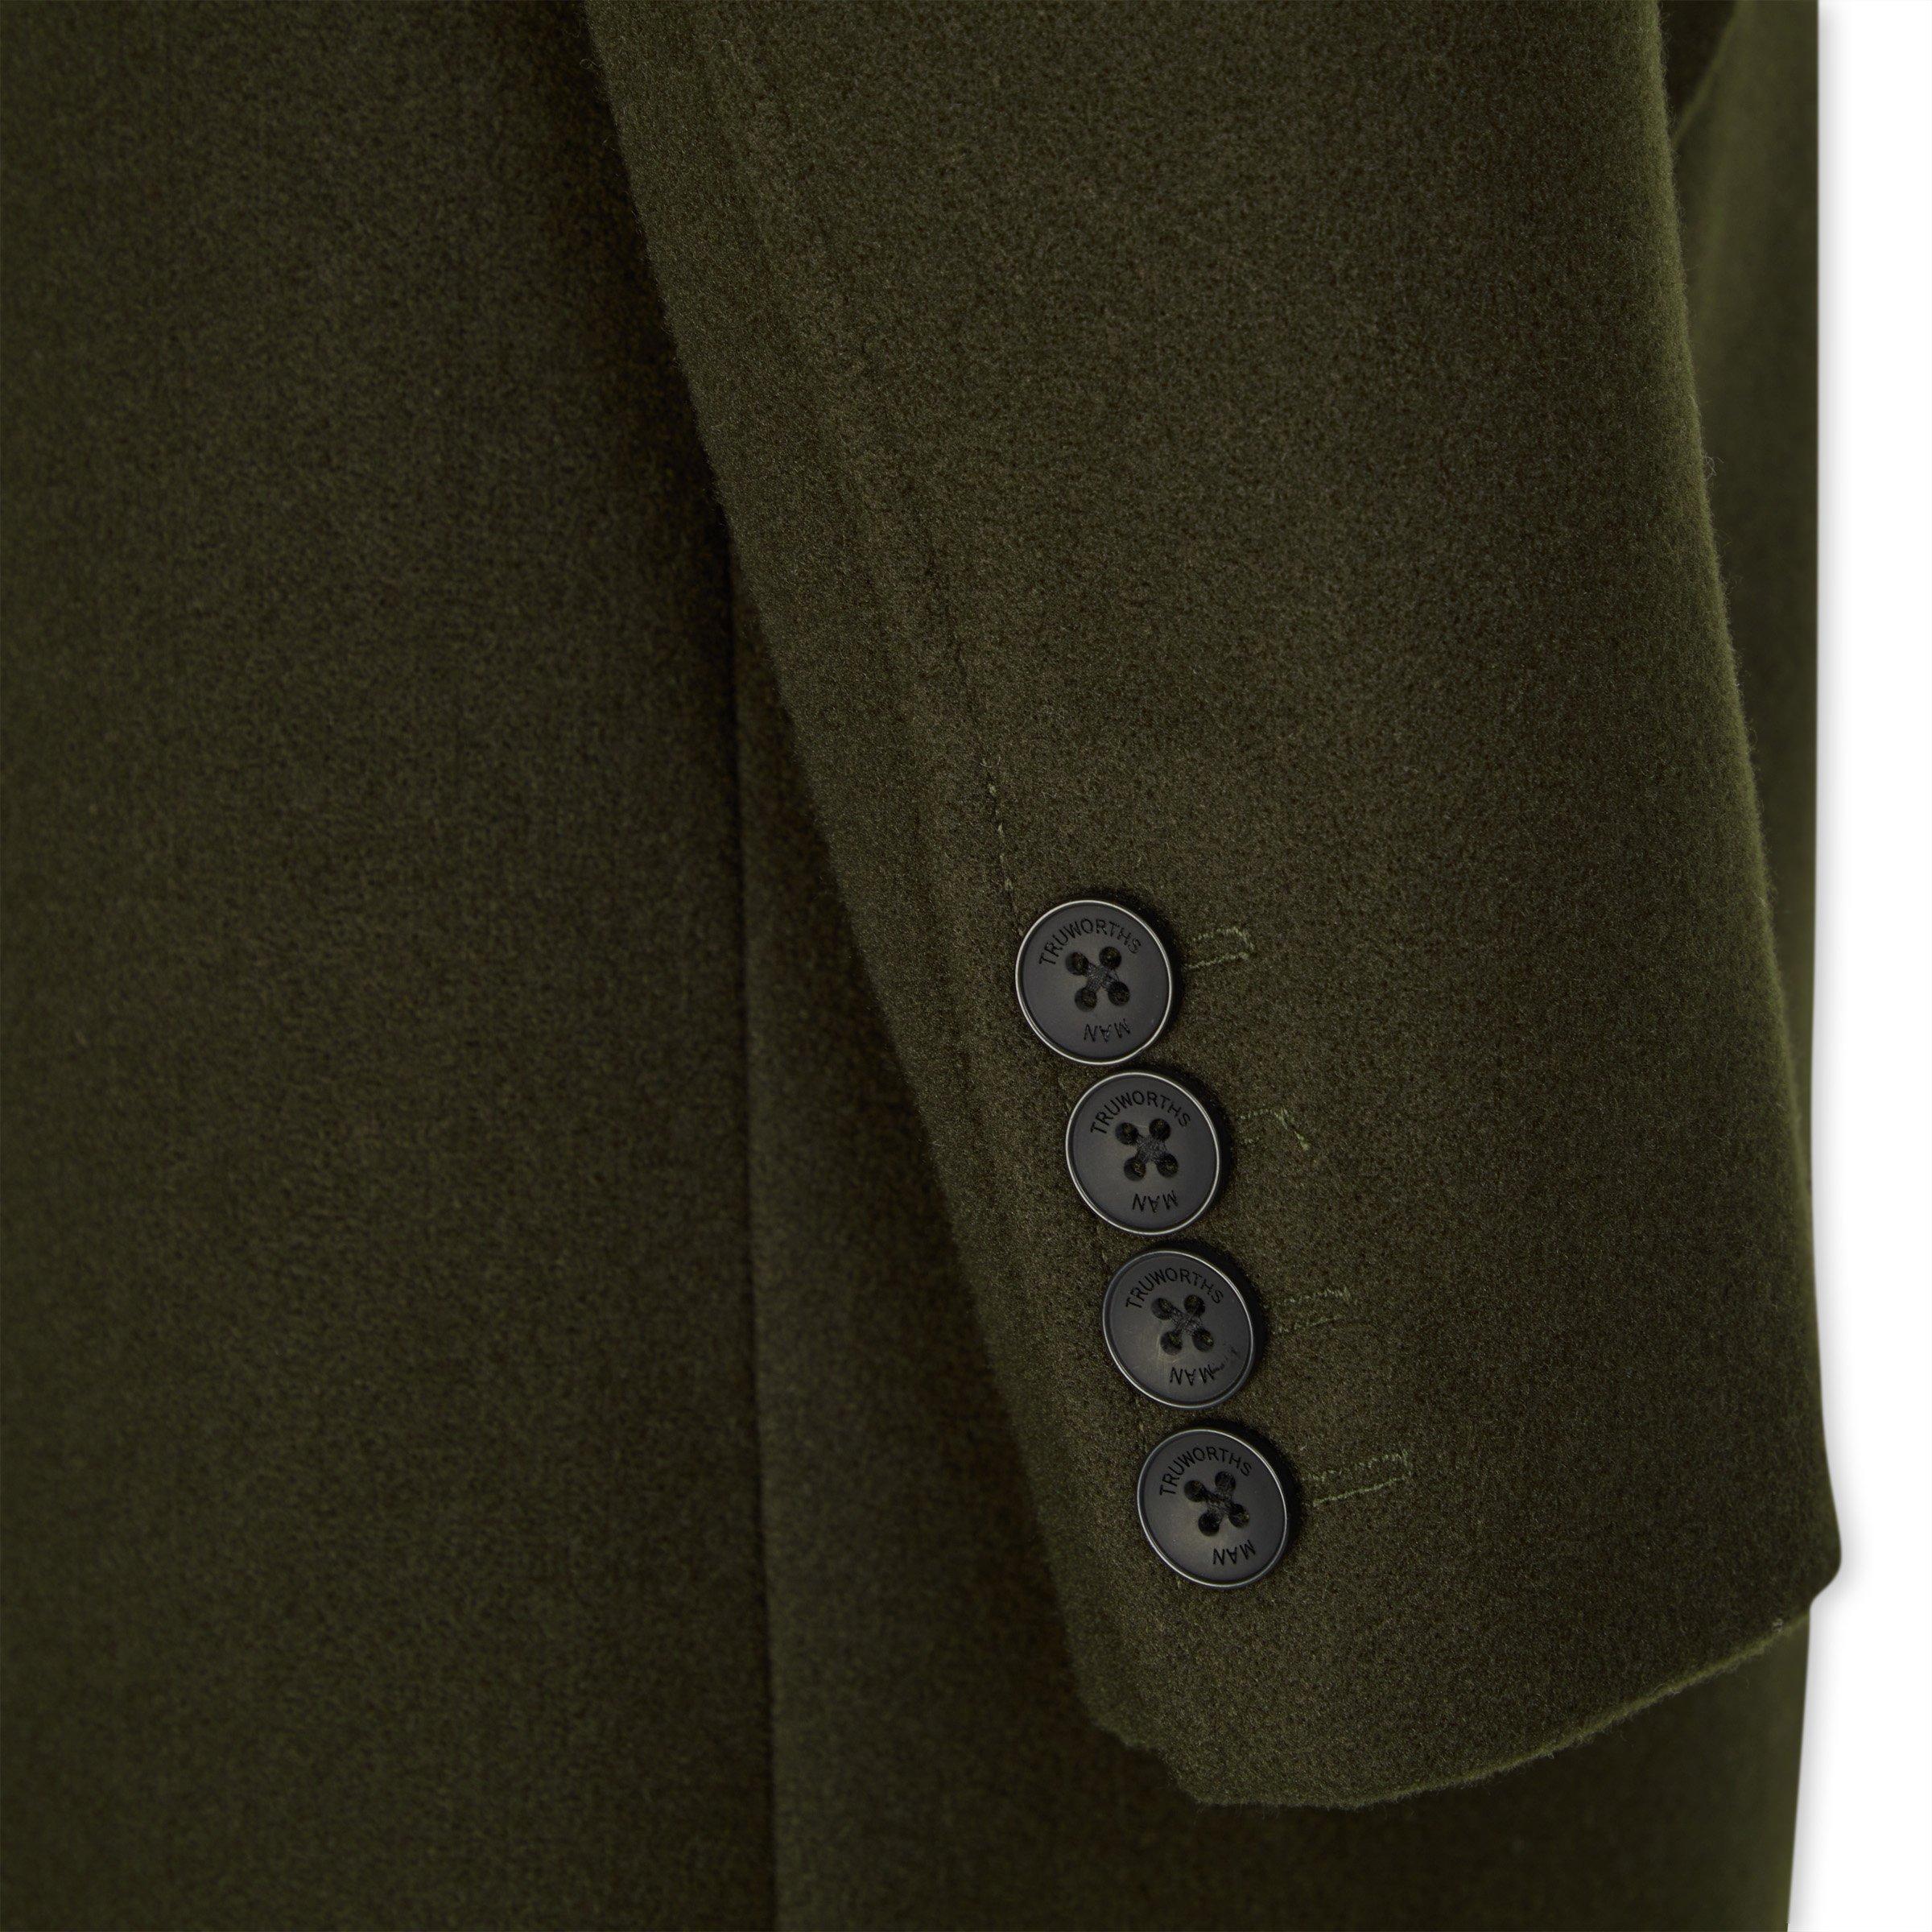 Green Hooded Coat (3056781)